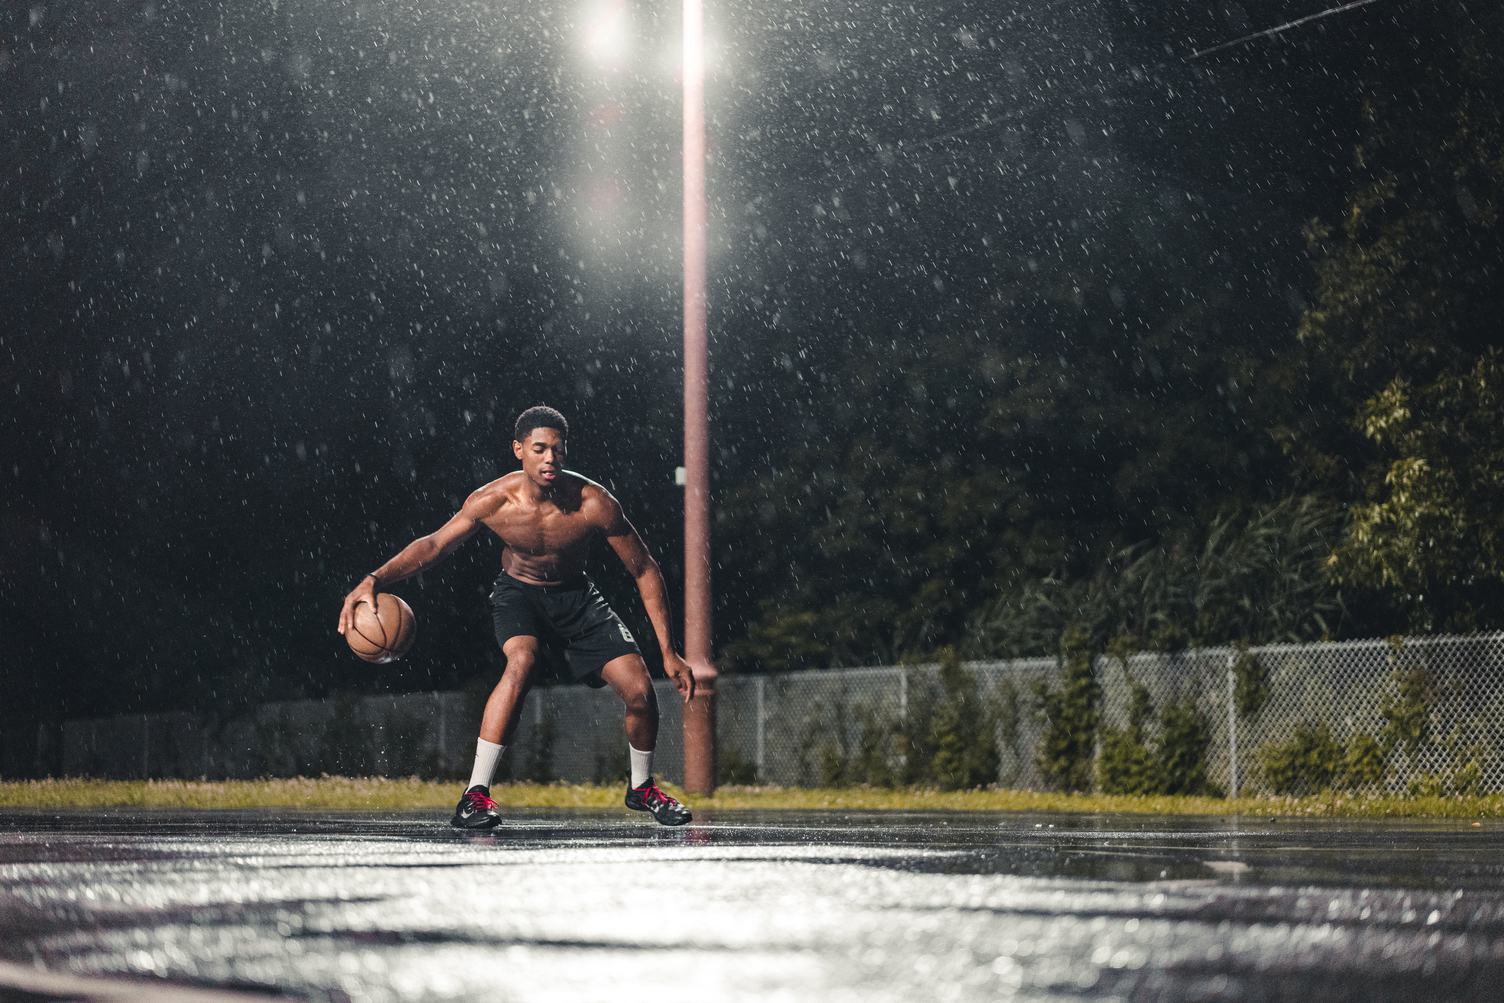 Athlete Male Playing Basketball at Rainy Night Outdoors